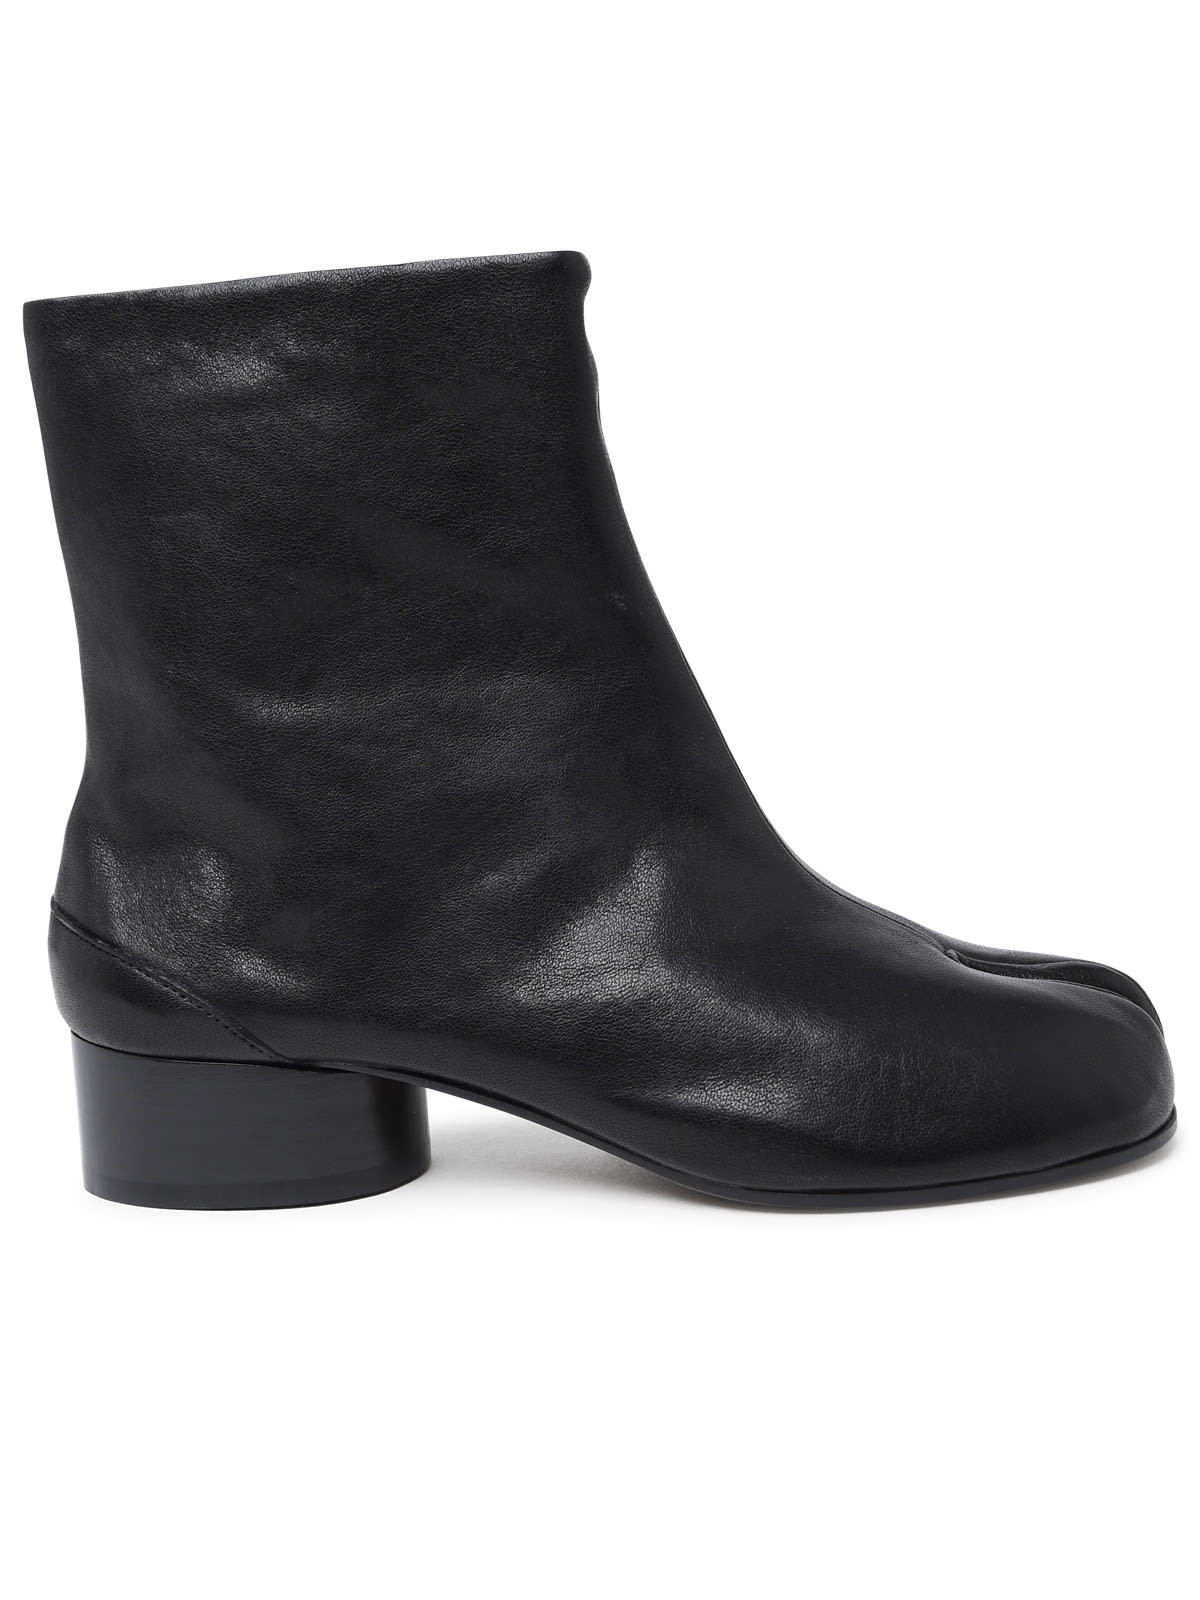 Maison Margiela Black Nappa Leather Ankle Boots